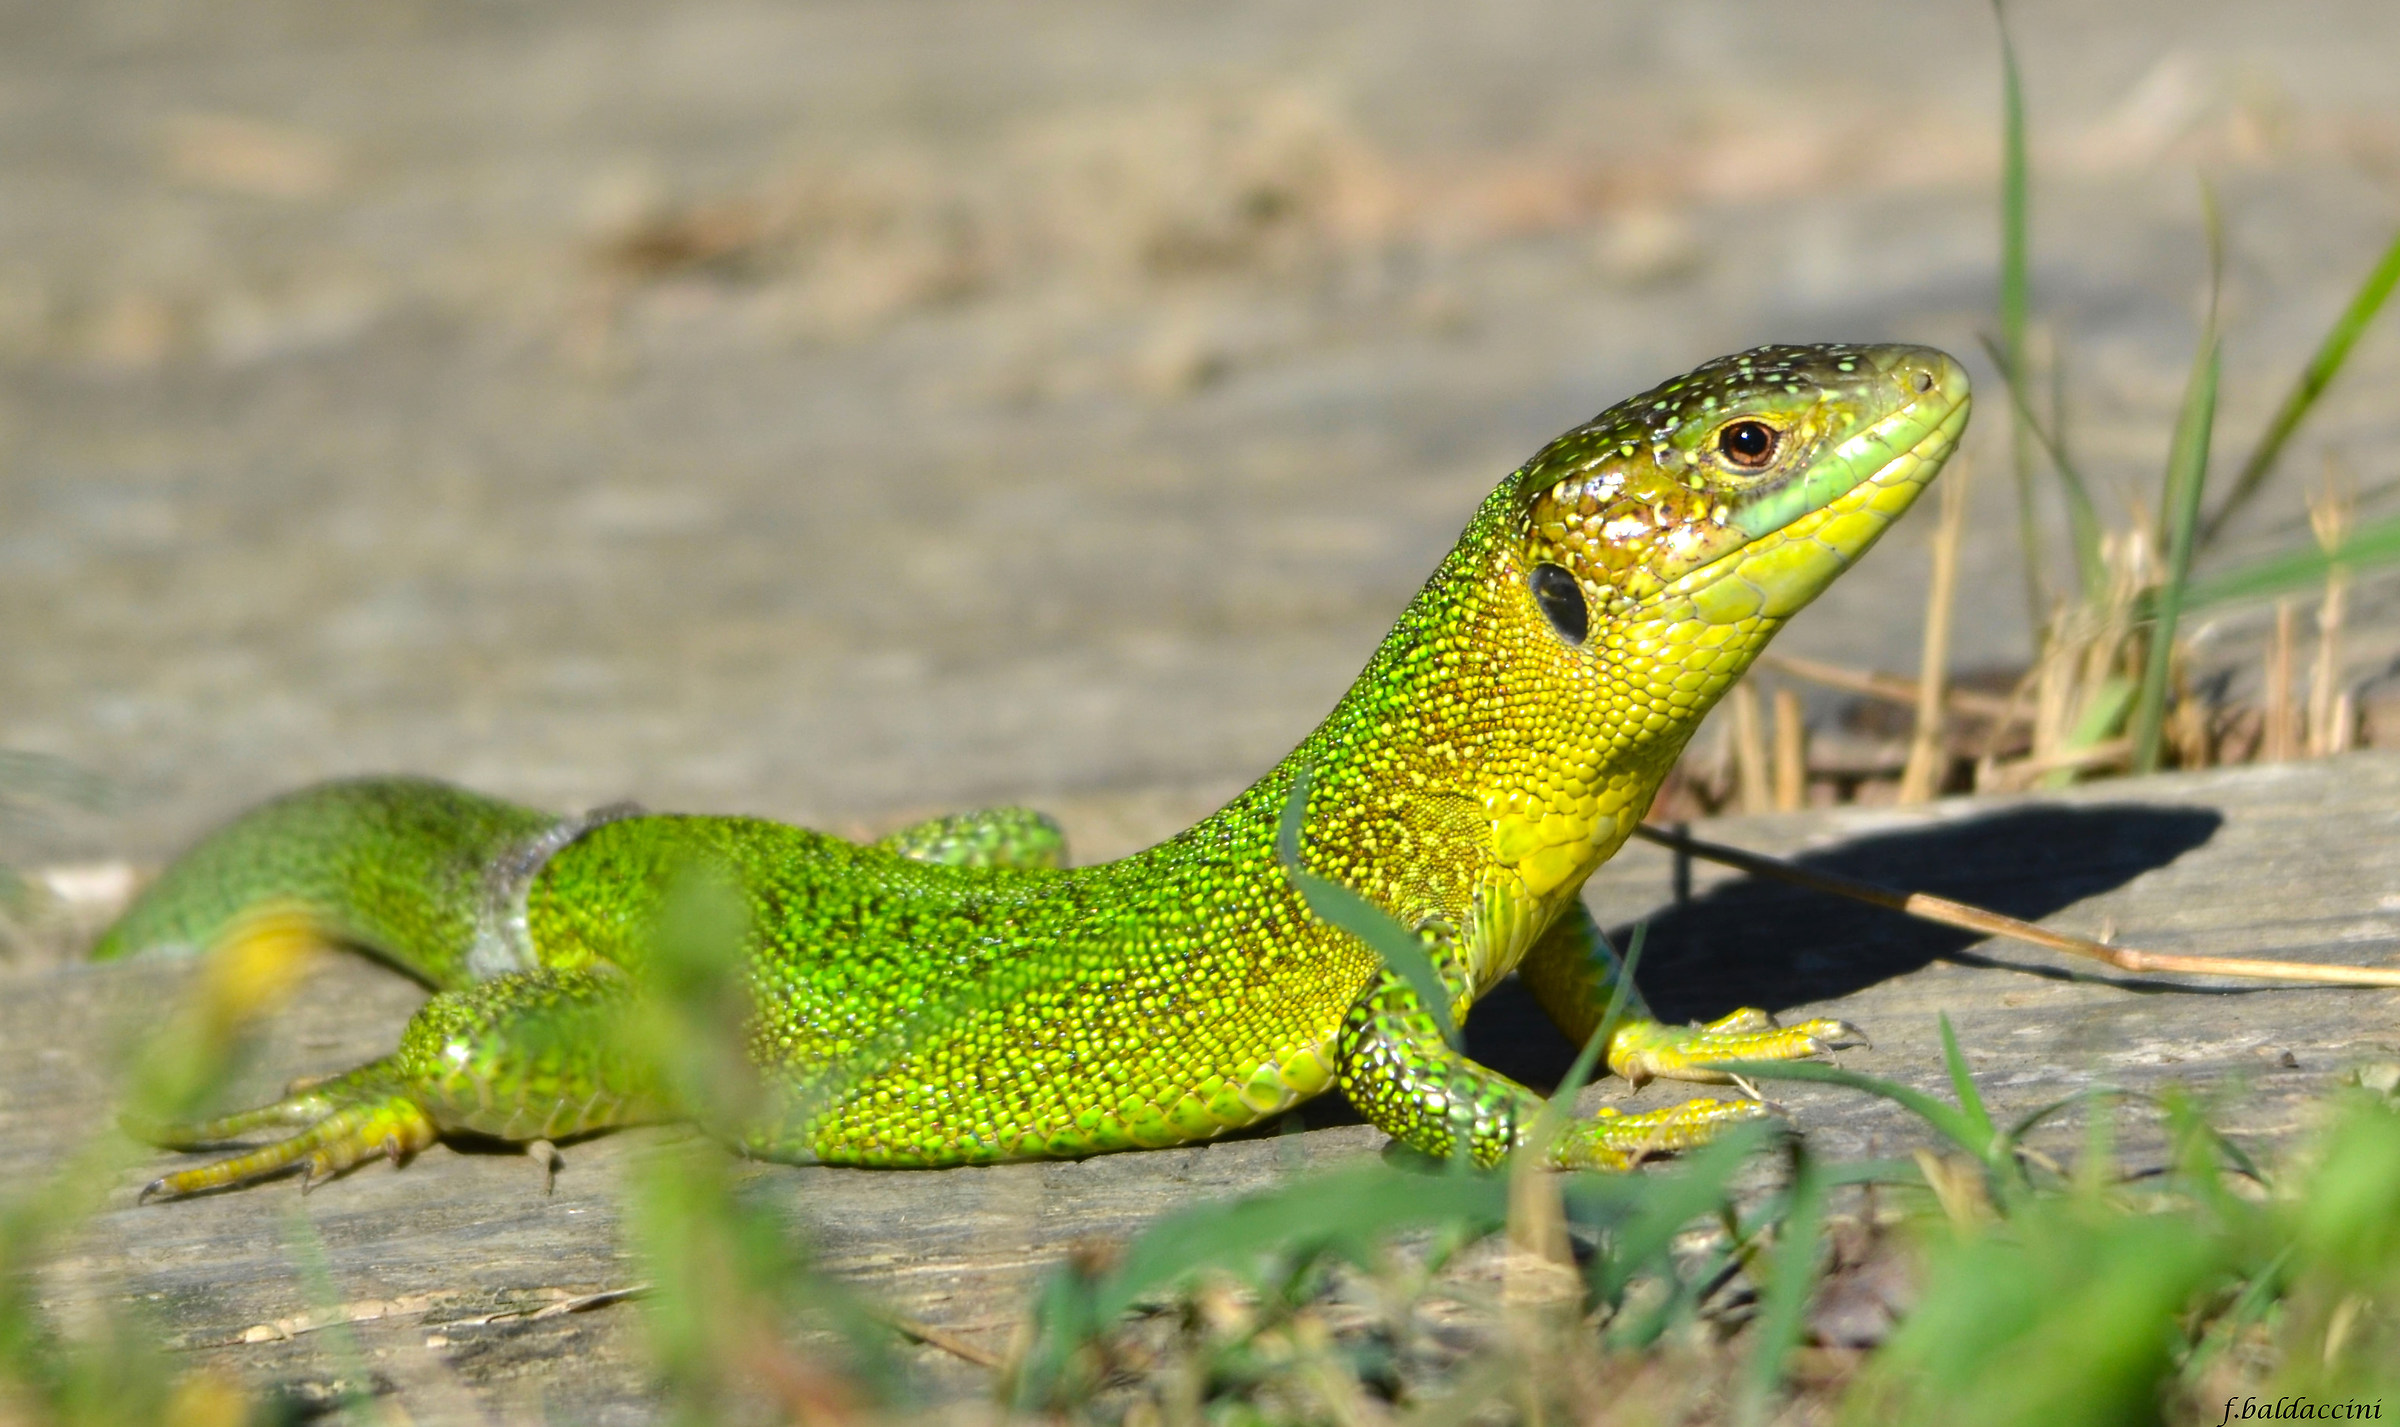 The green lizard....